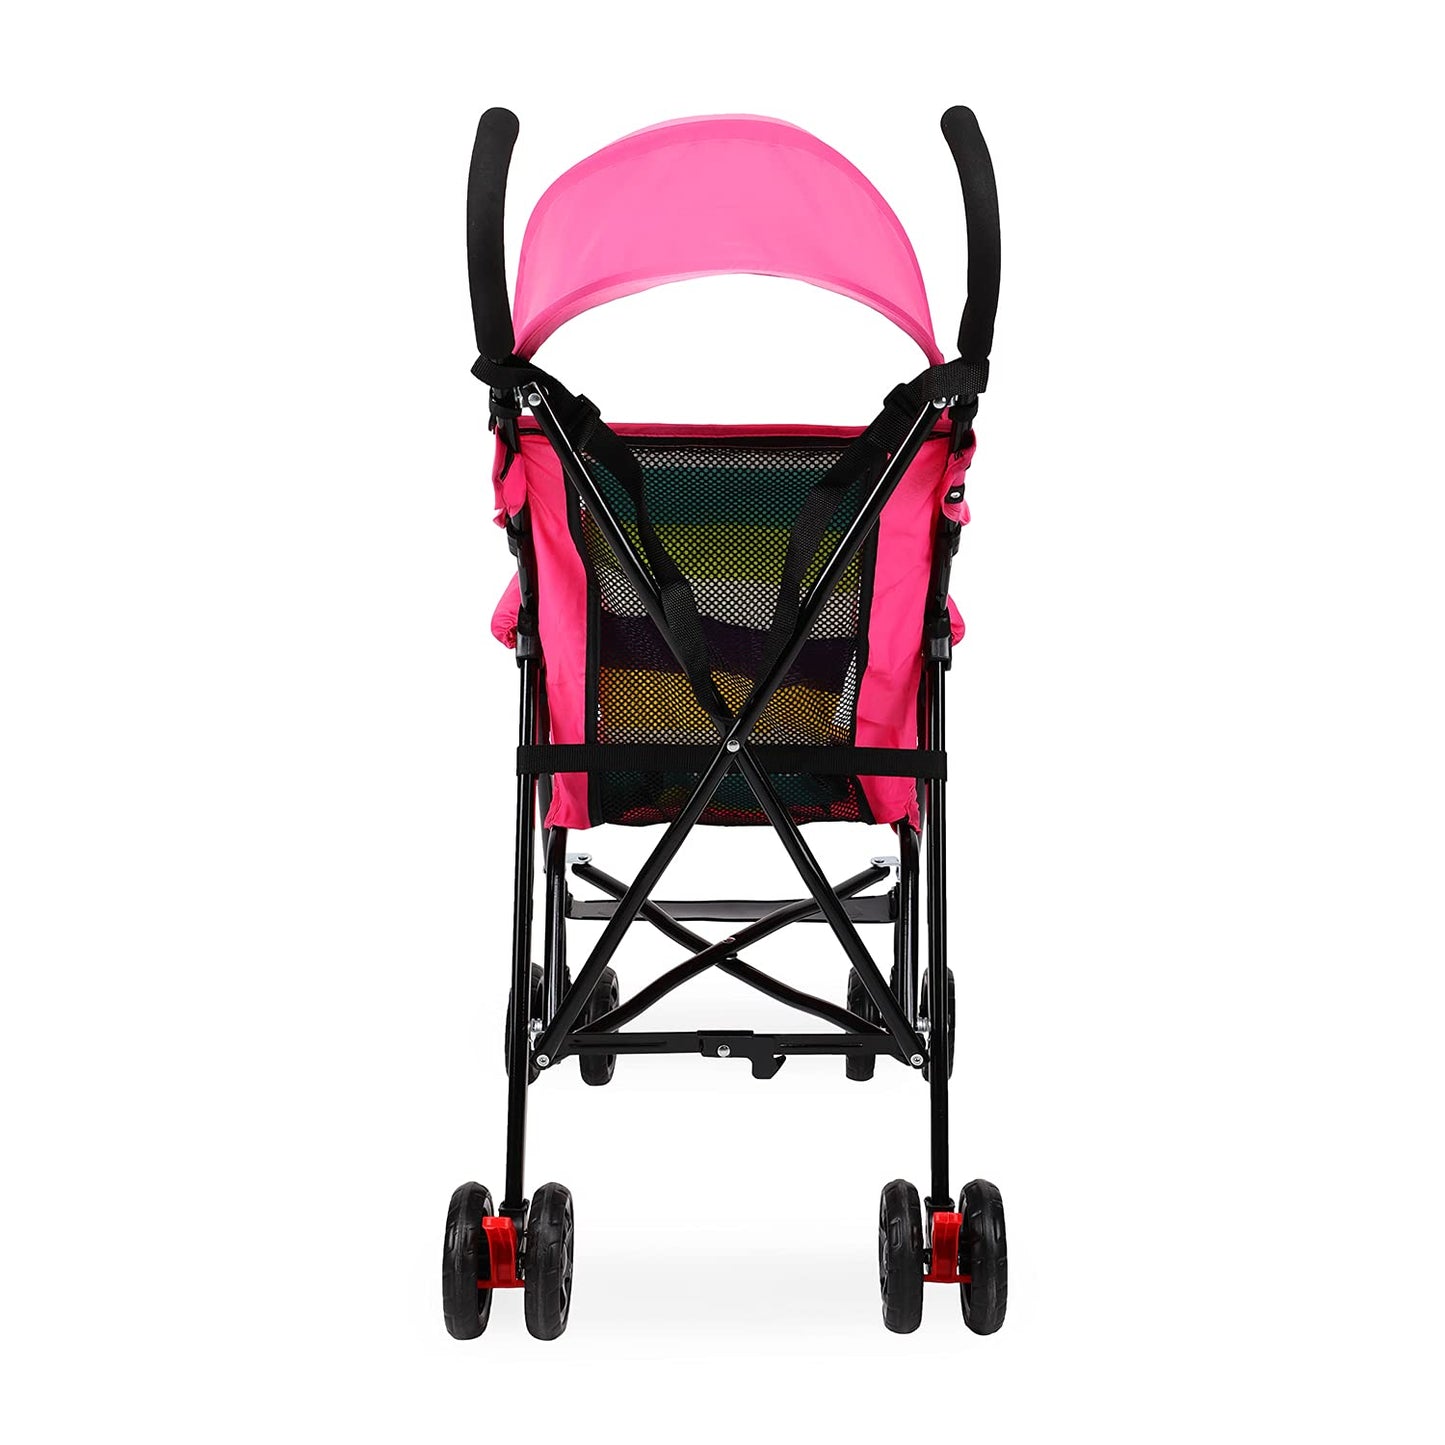 GettBoles Foldable Baby Stroller for Kids-Buggy Pram for Newborn/Infants with Easy Folding, Footrest, Multi Pink